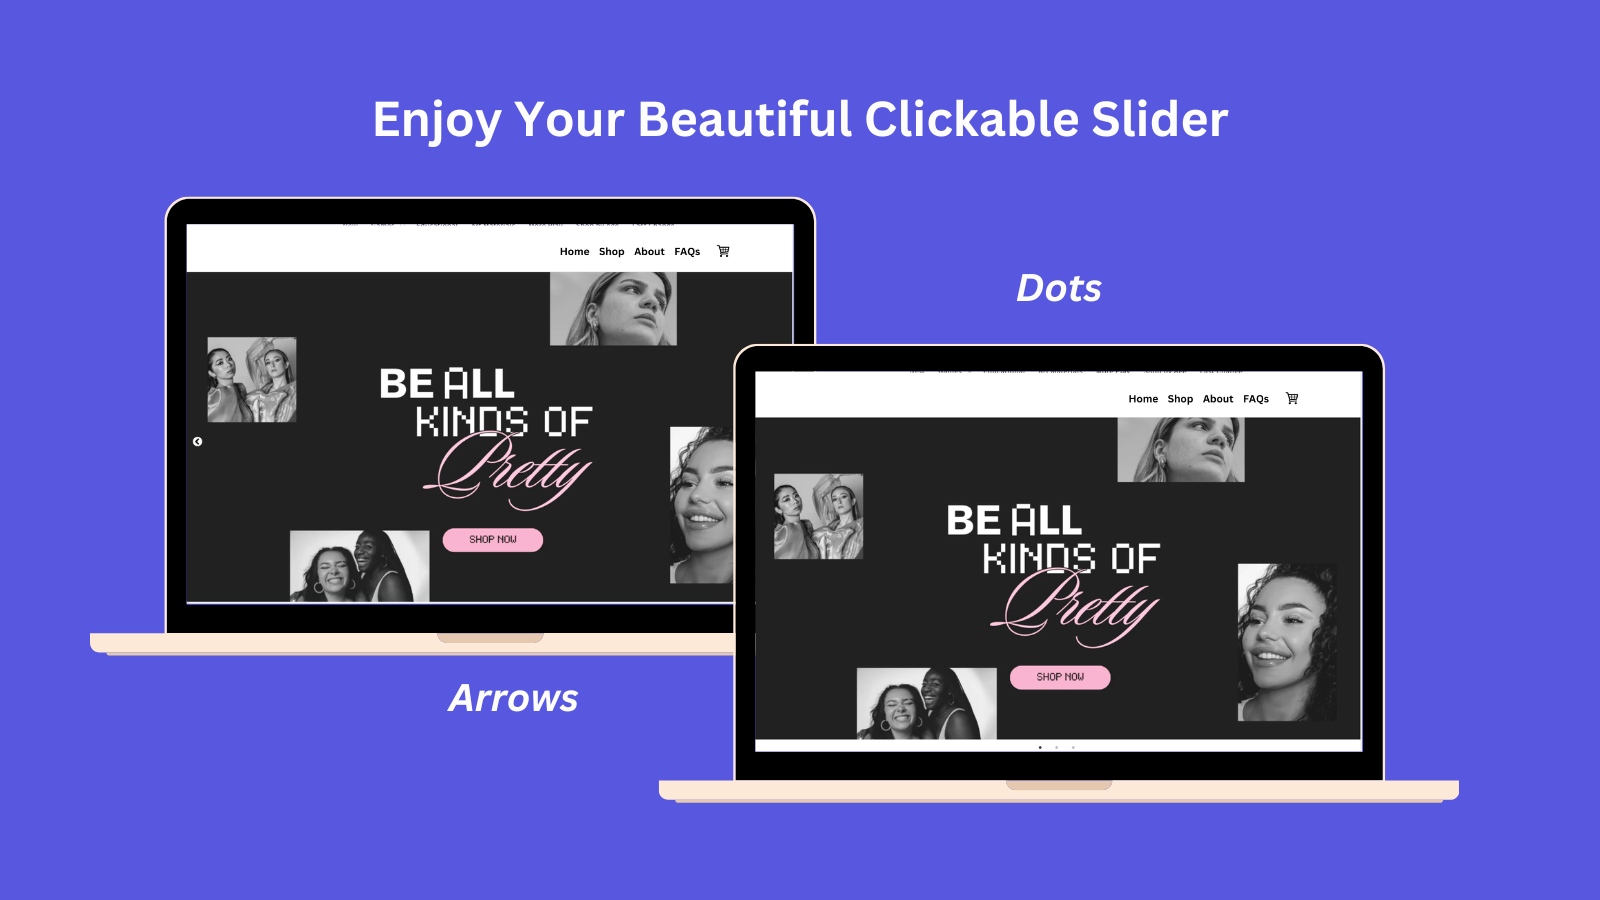 Enjoy Your Beautiful Clickable Slider